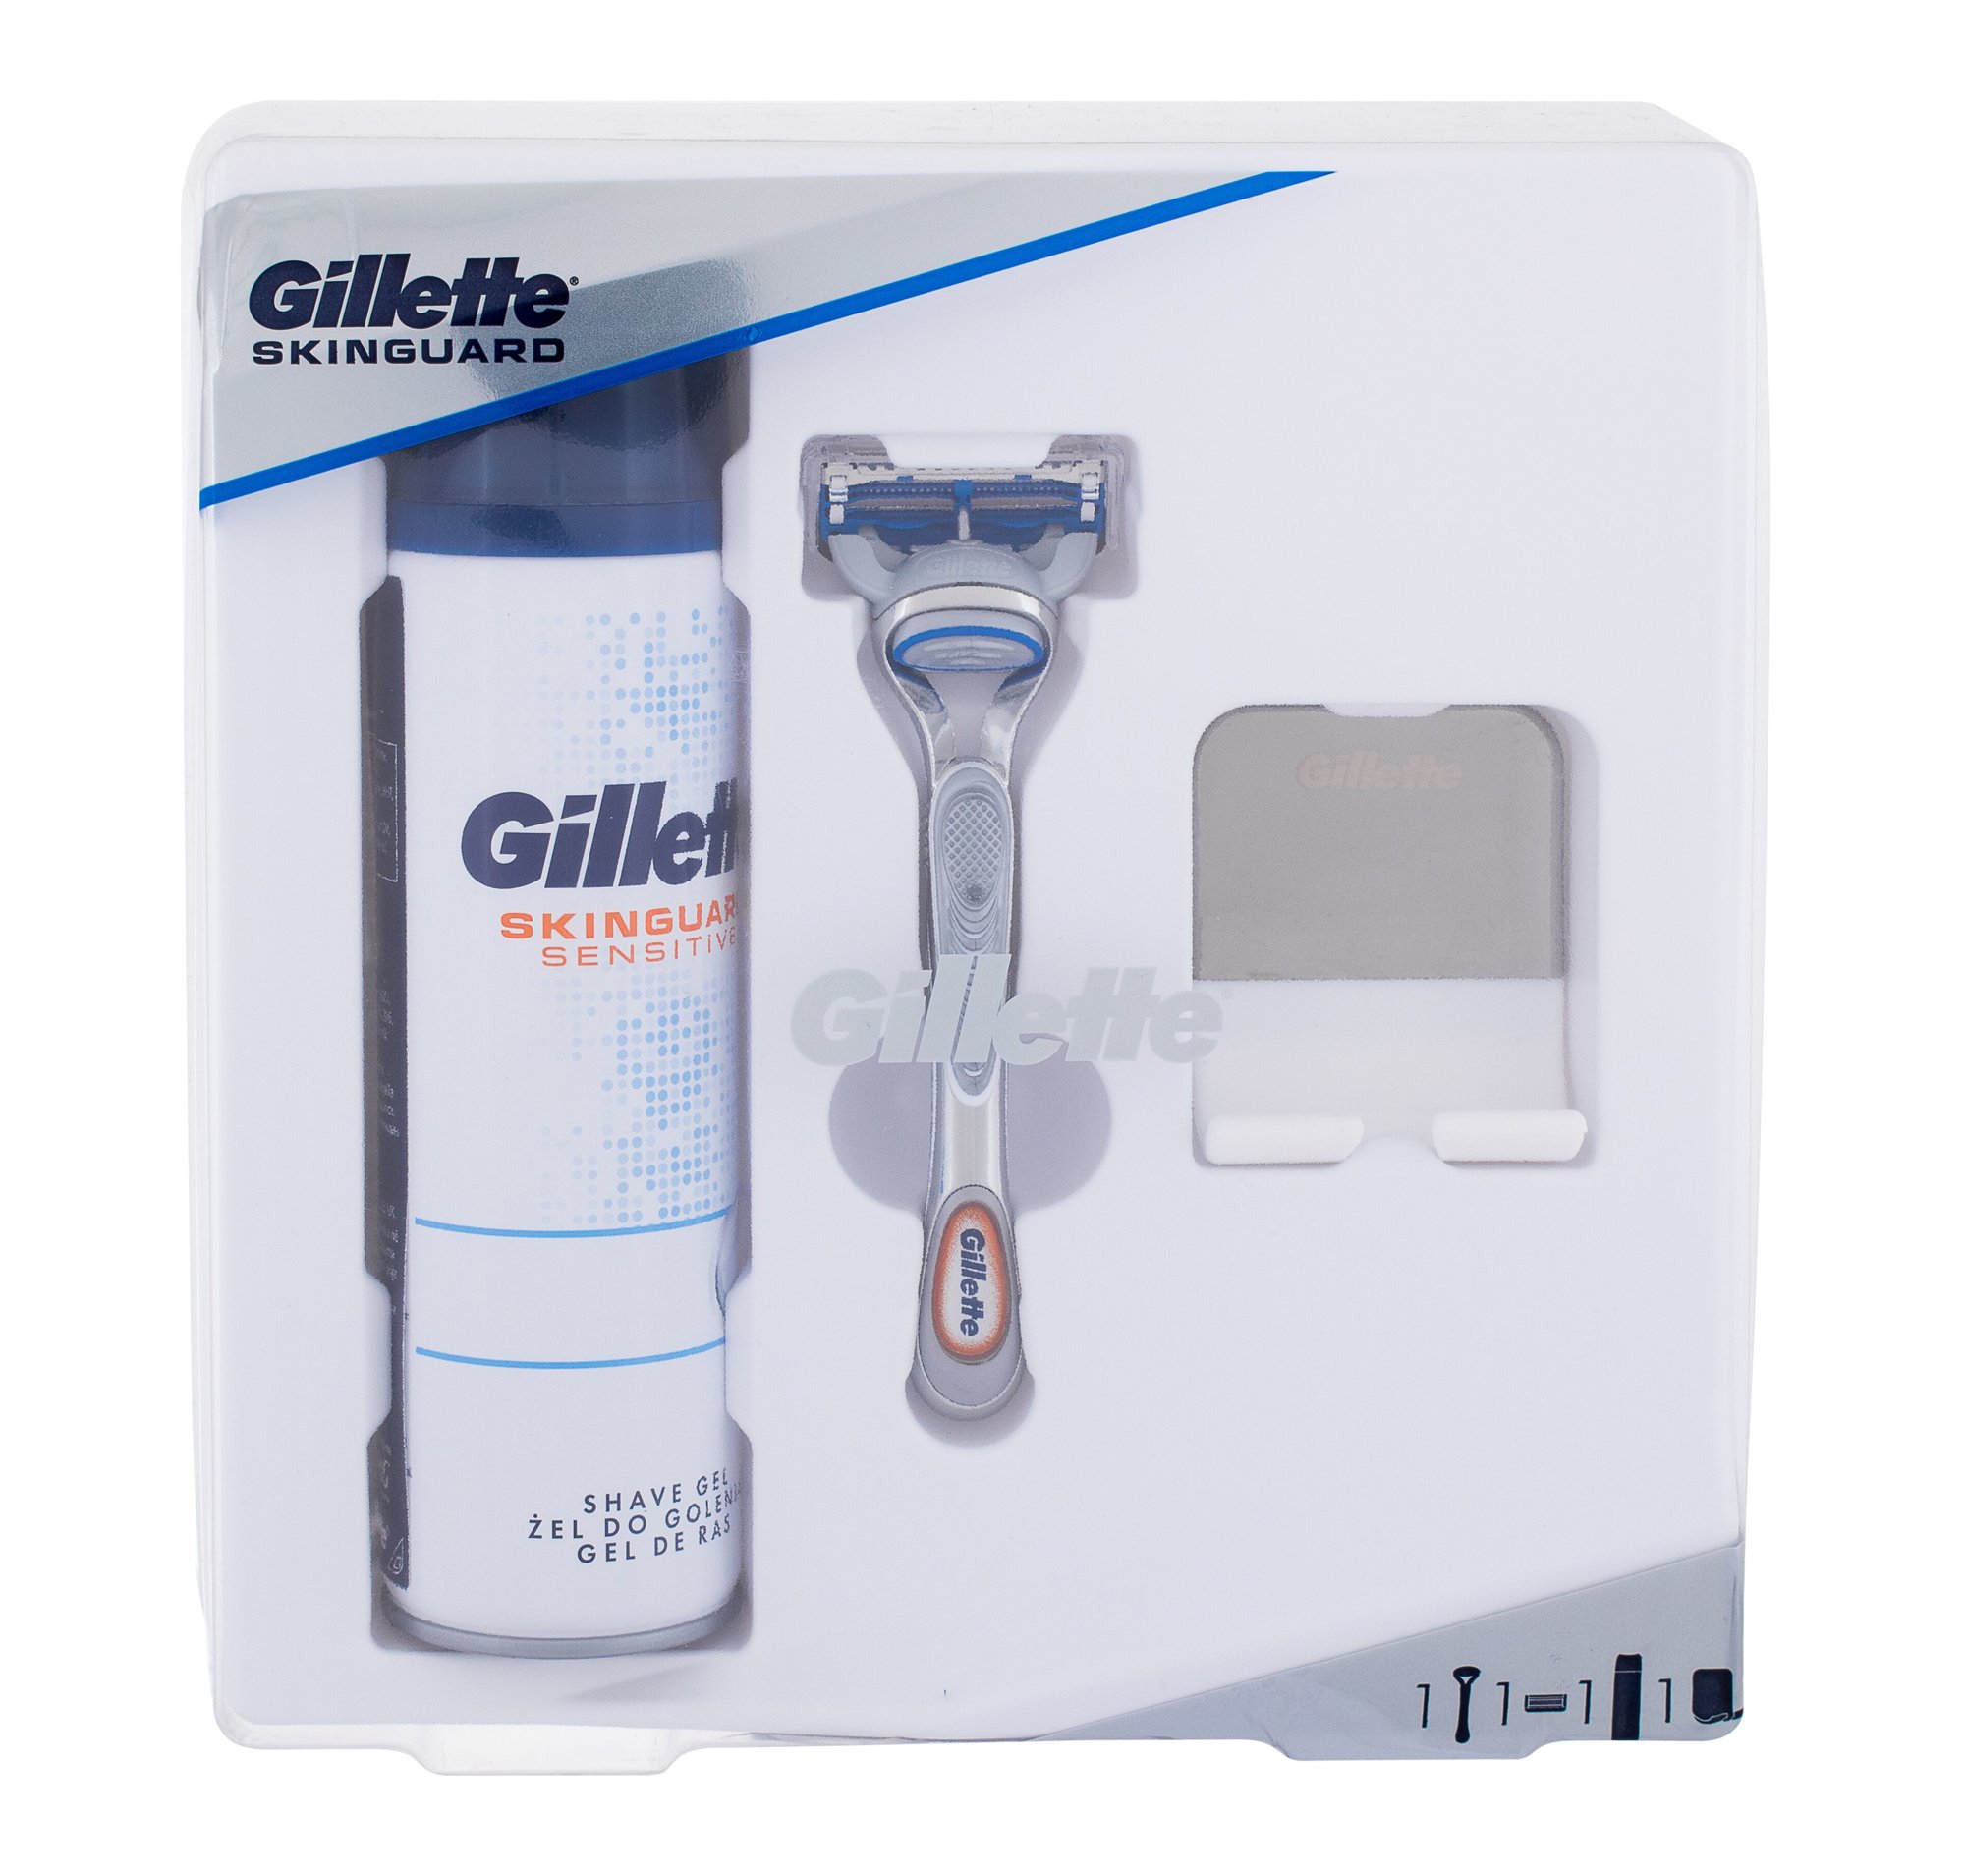 Gillette Skinguard Sensitive skustuvas